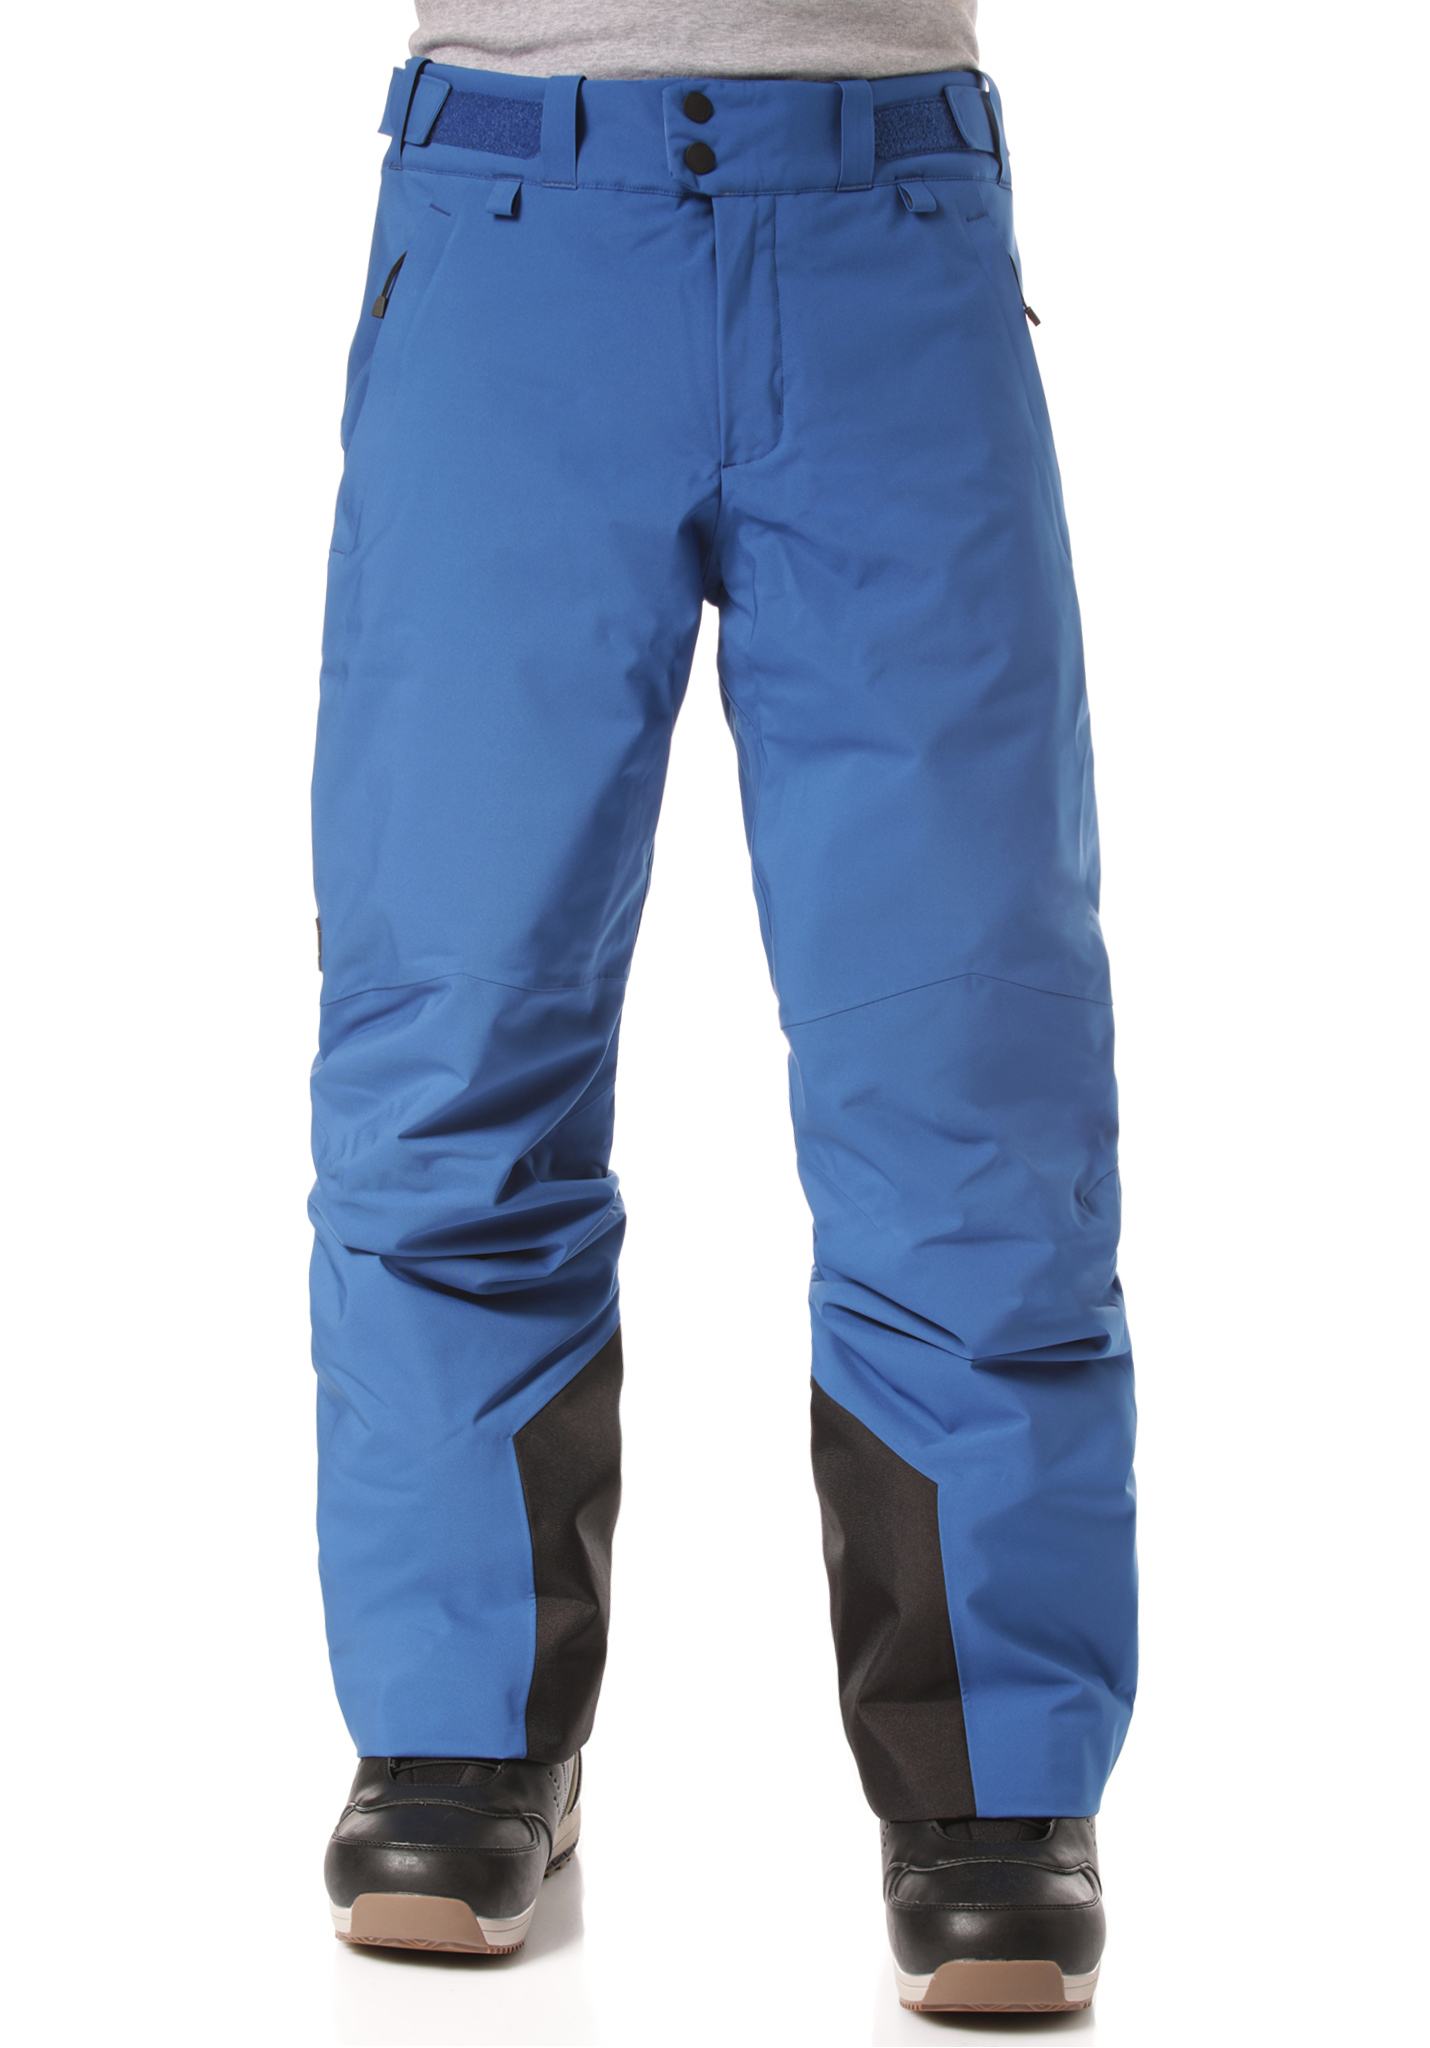 Peak Performance Maroon Snowboardhosen blau XL